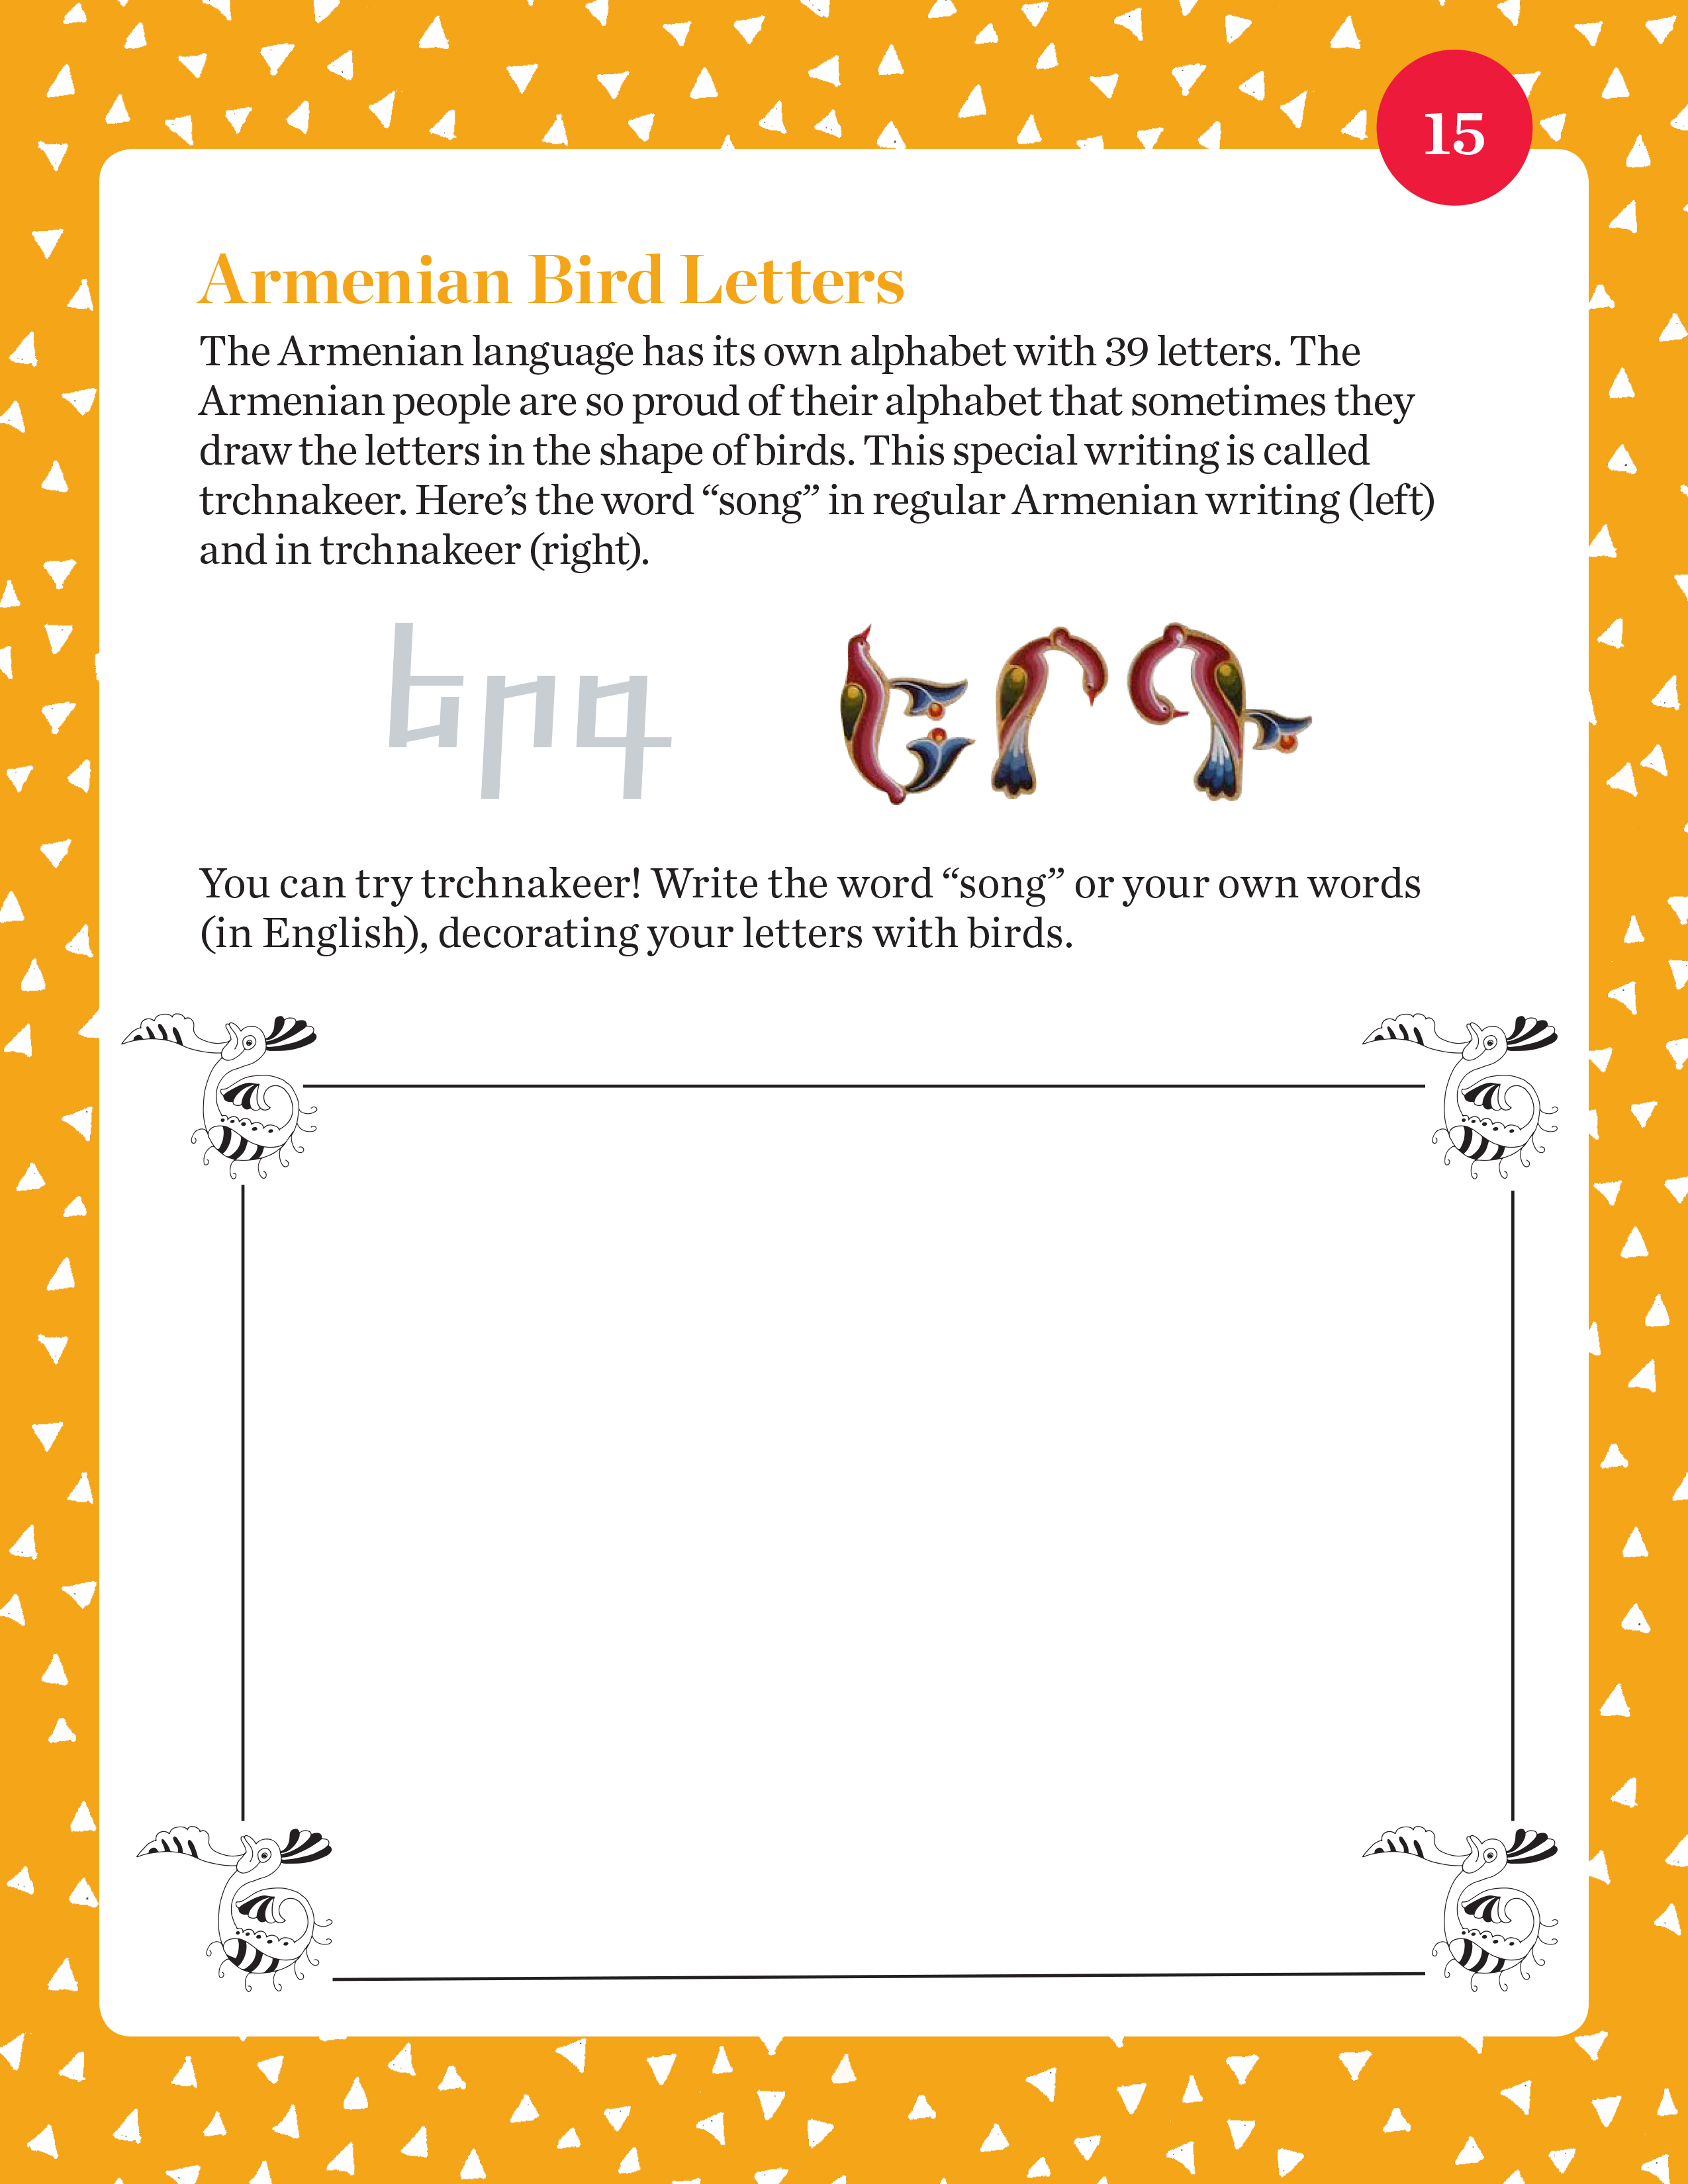 Armenian Bird Letters activity